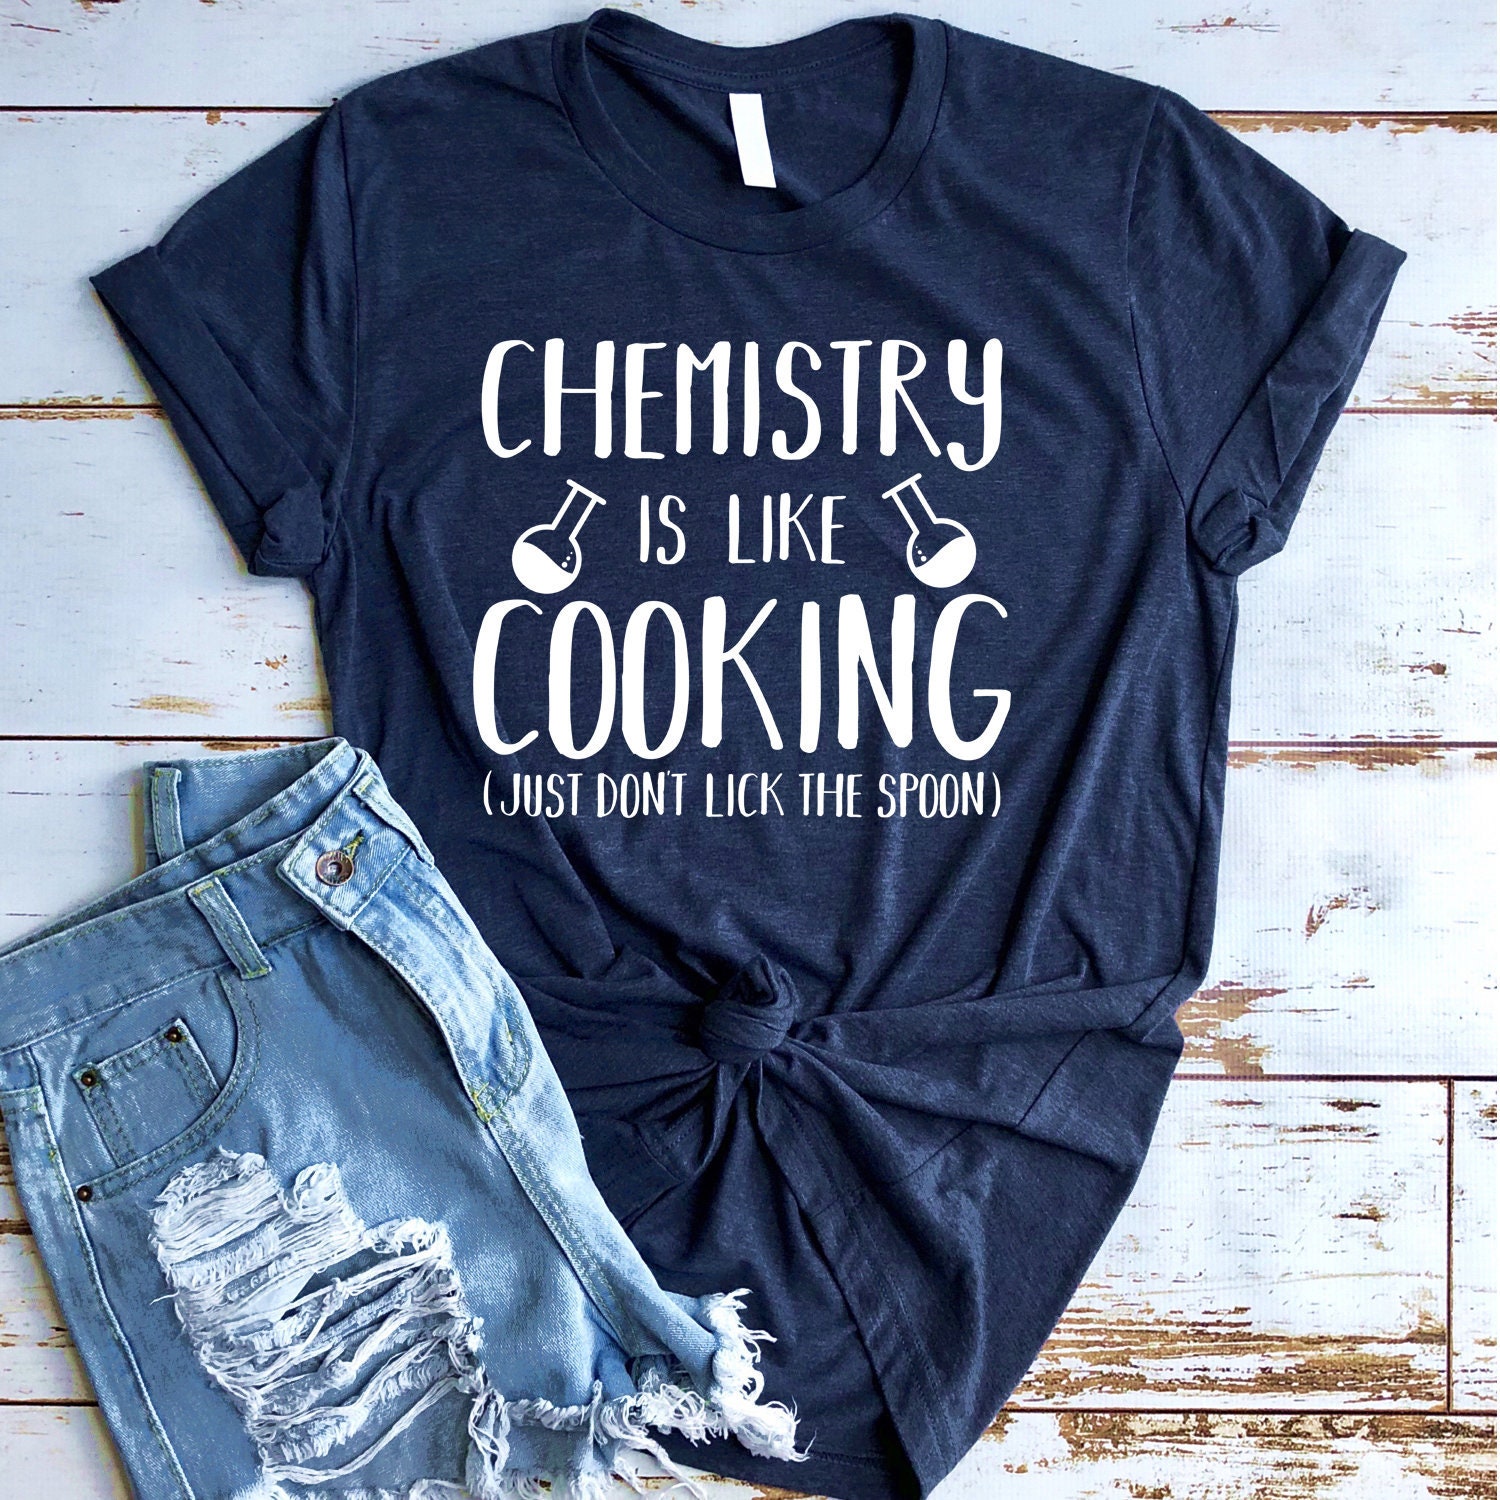 Funny Shirt for Fun-Loving Chemists